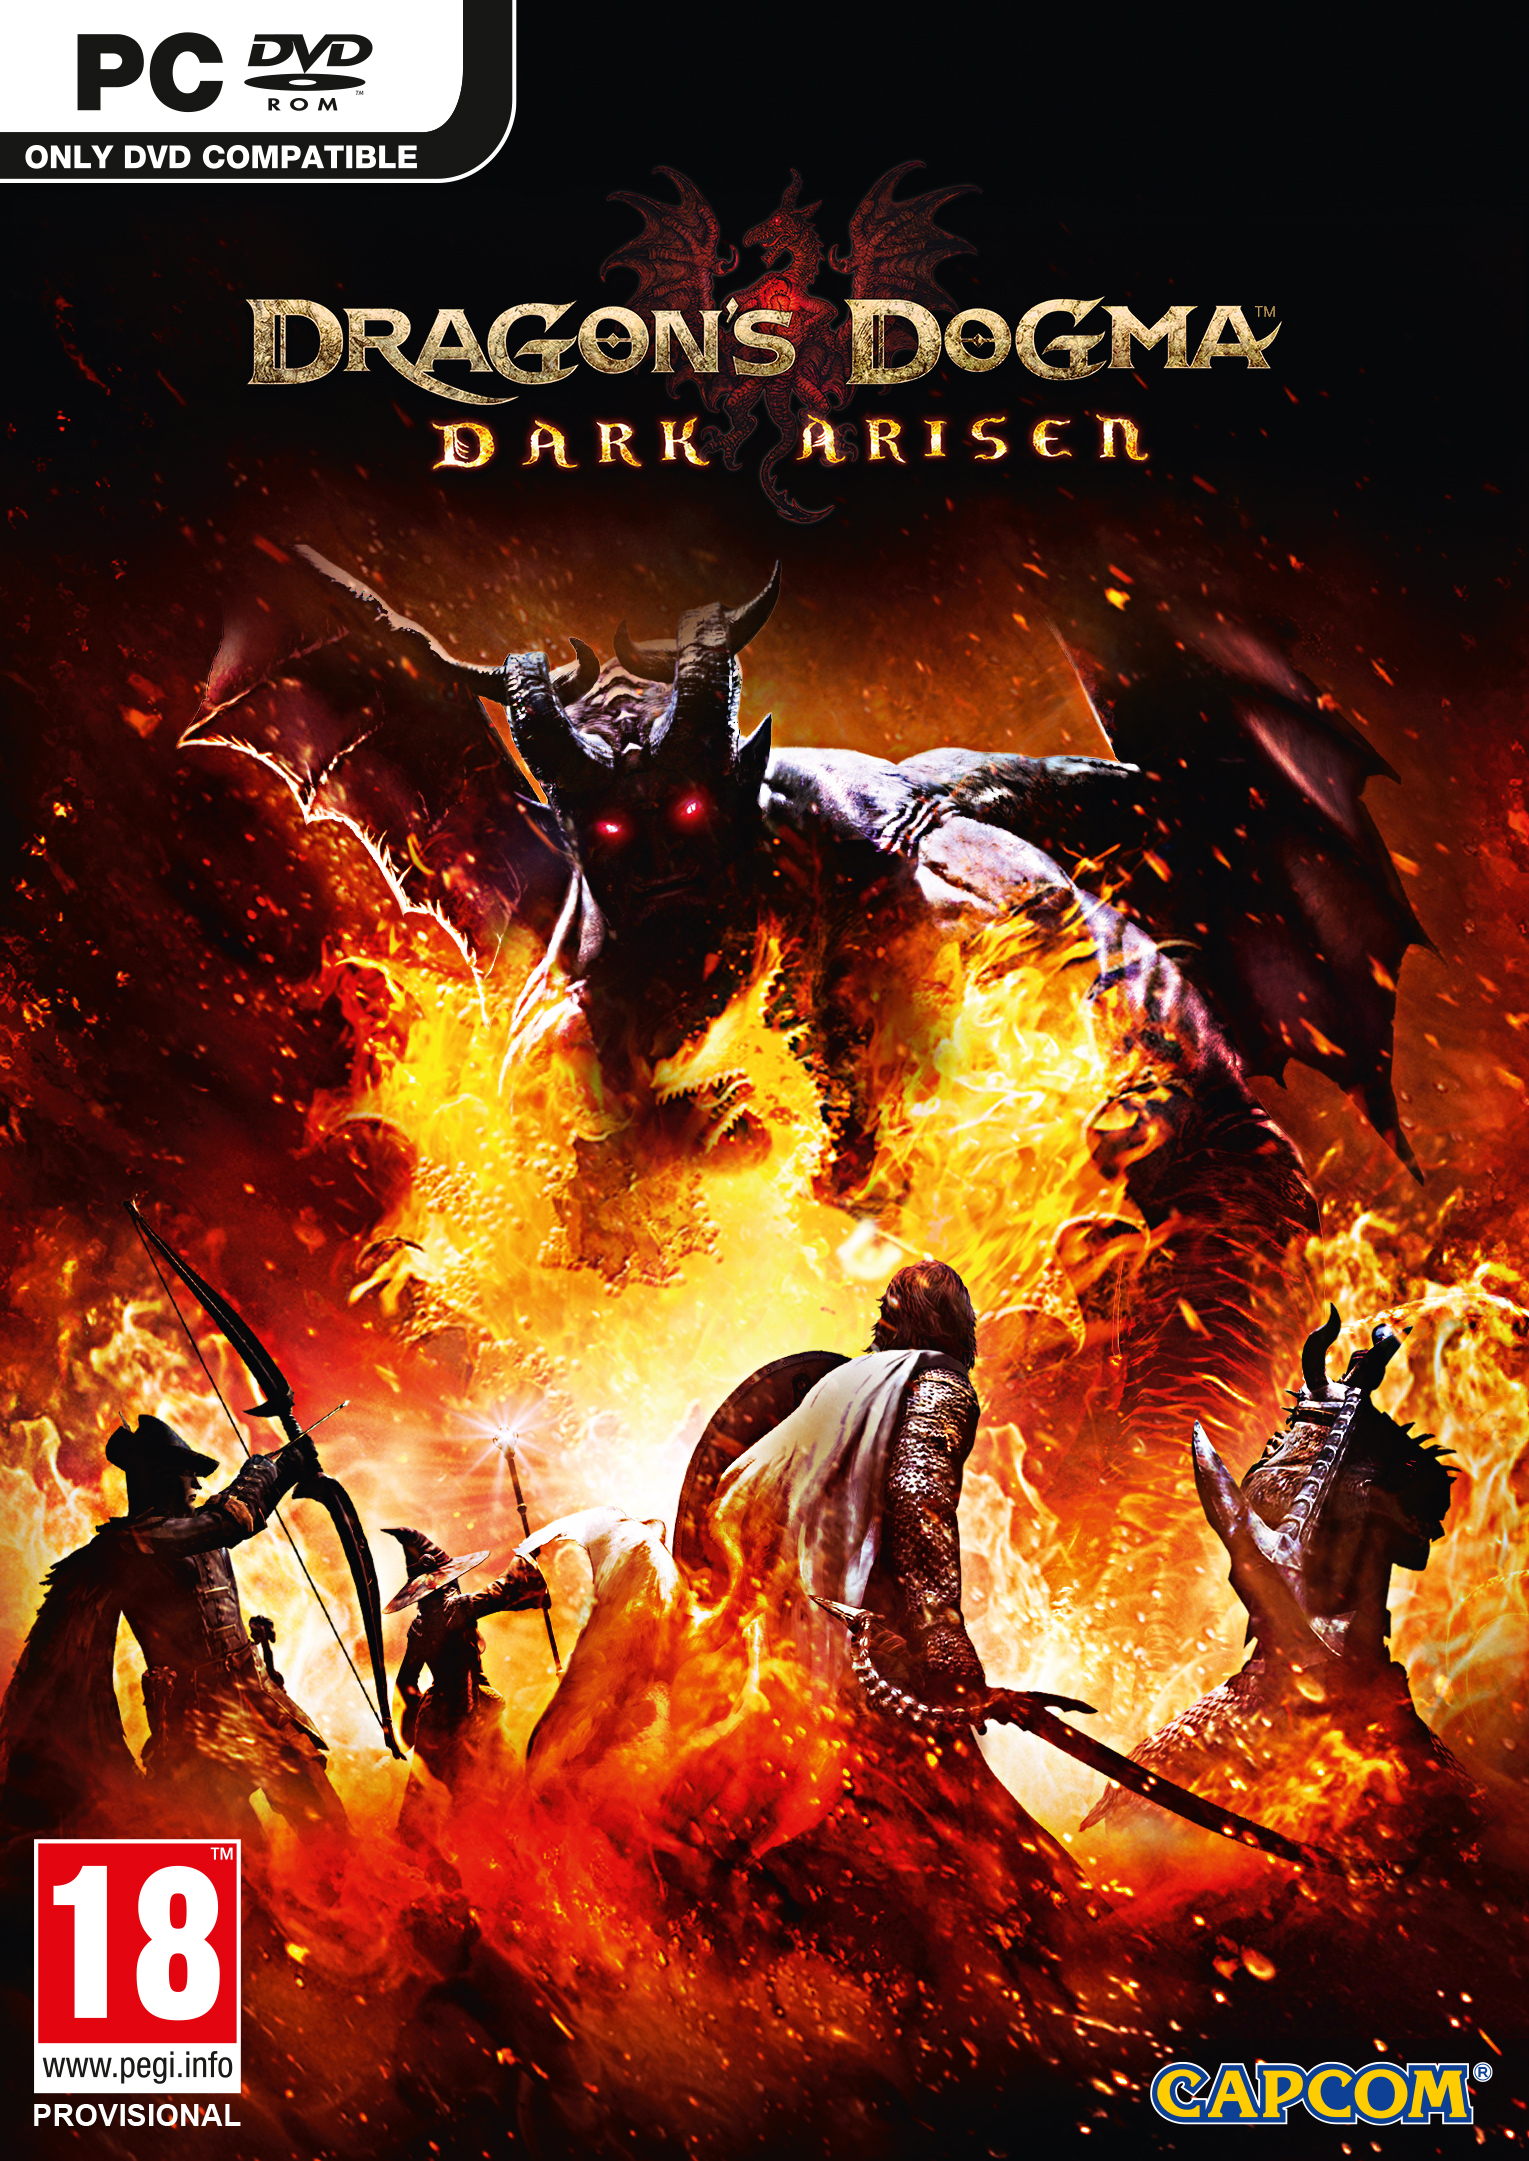 Dragon's Dogma: Dark Arisen (PC), Capcom